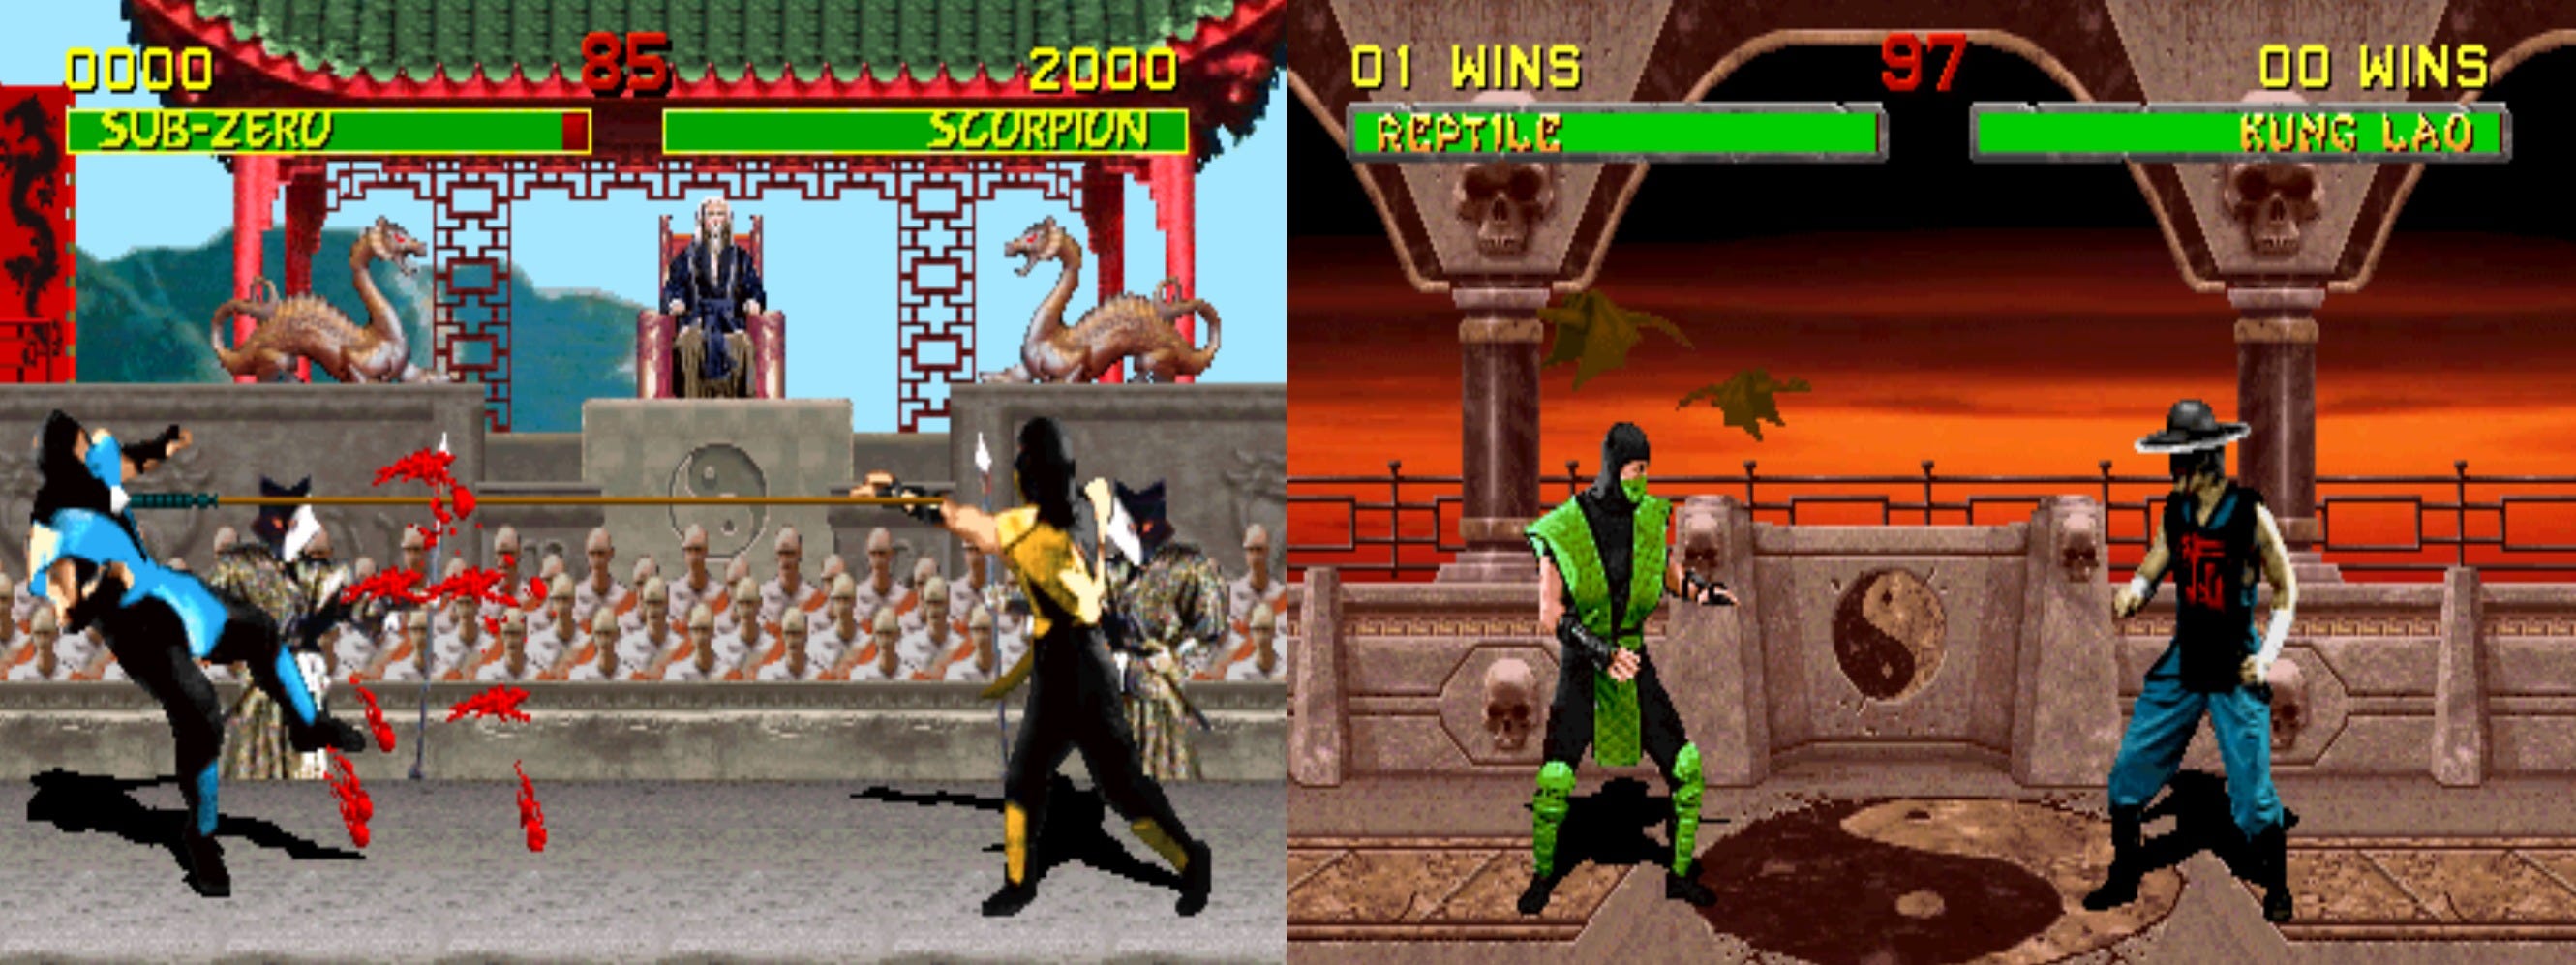 Long Live Mortal Kombat's Kickstarter page is up!